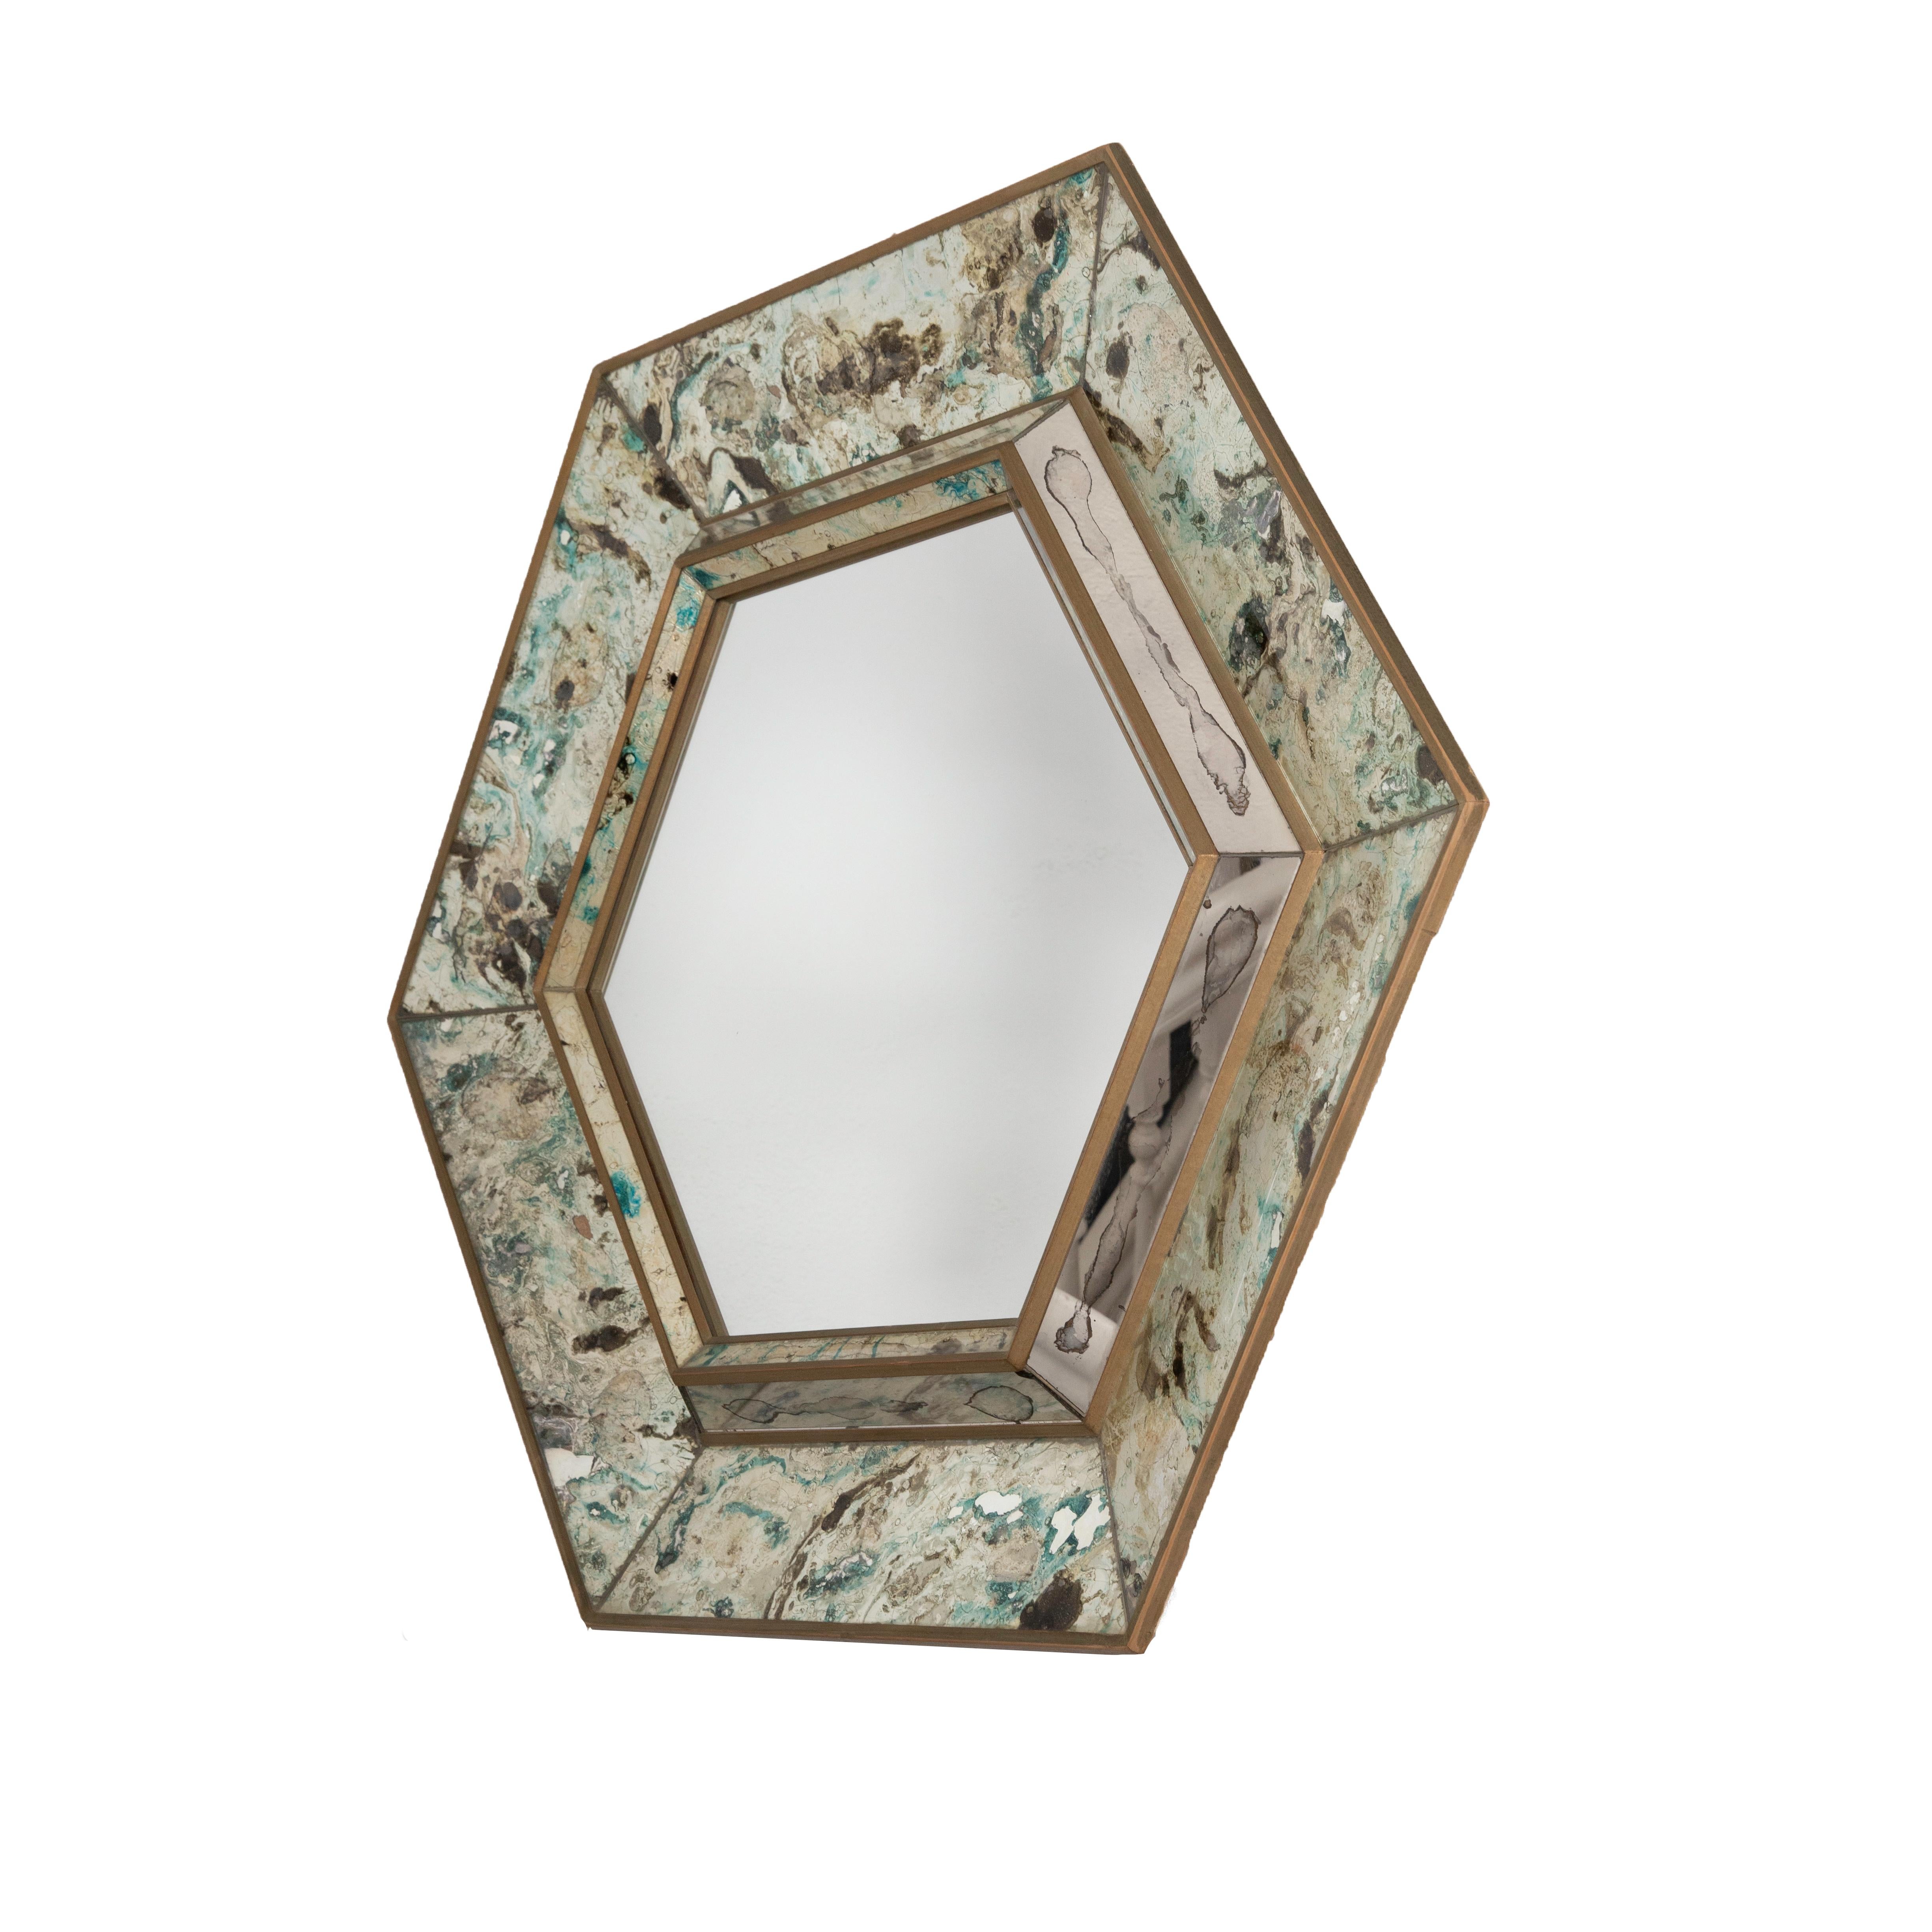 Hexagonal reverse painted mirror.